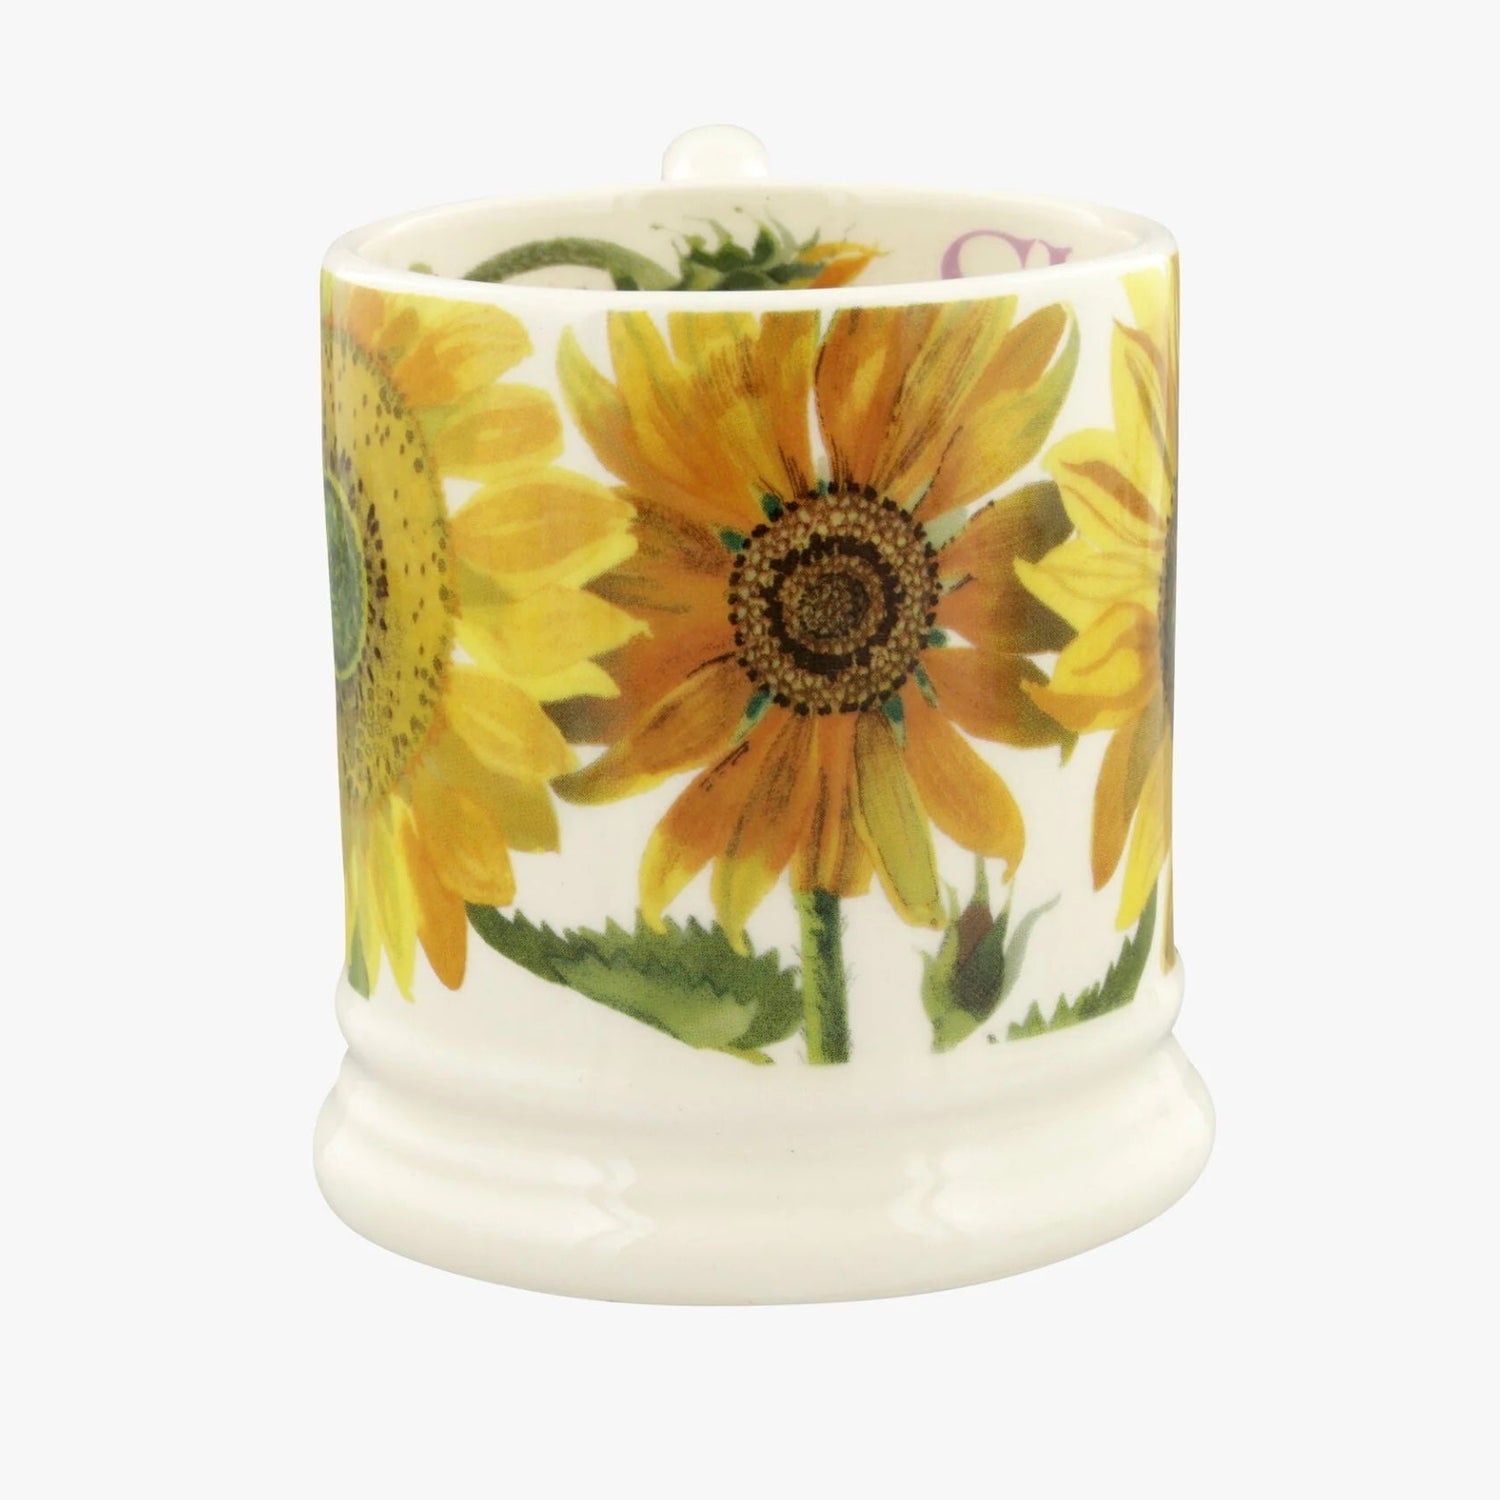 Emma Bridgewater - Sunflower 1/2 Pint Mug - The Flower Crate